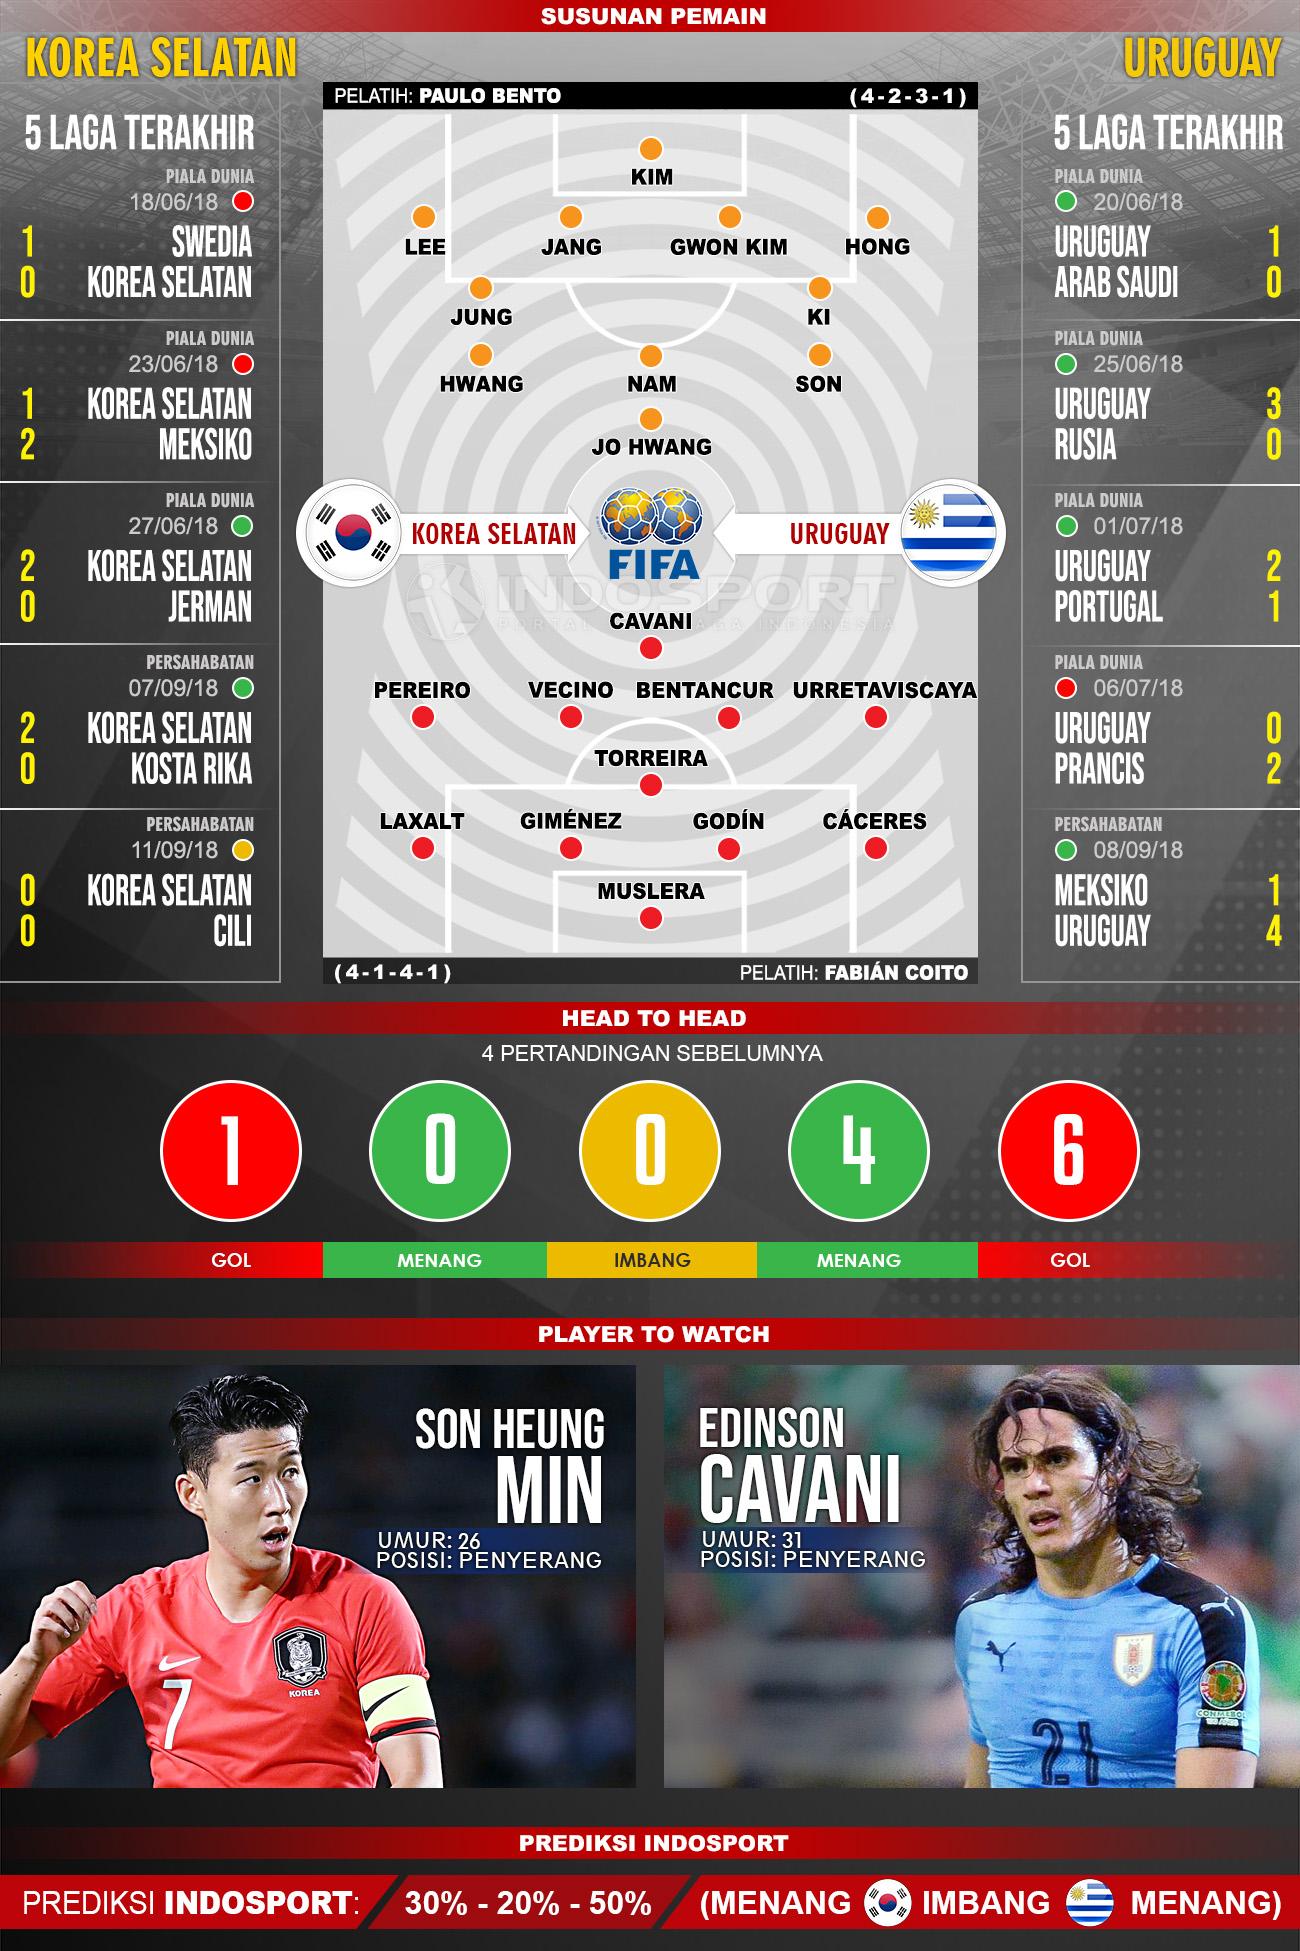 Korea Selatan vs Uruguay (Susunan Pemain - Lima Laga Terakhir - Player to Watch - Prediksi Indosport). Copyright: Indosport.com